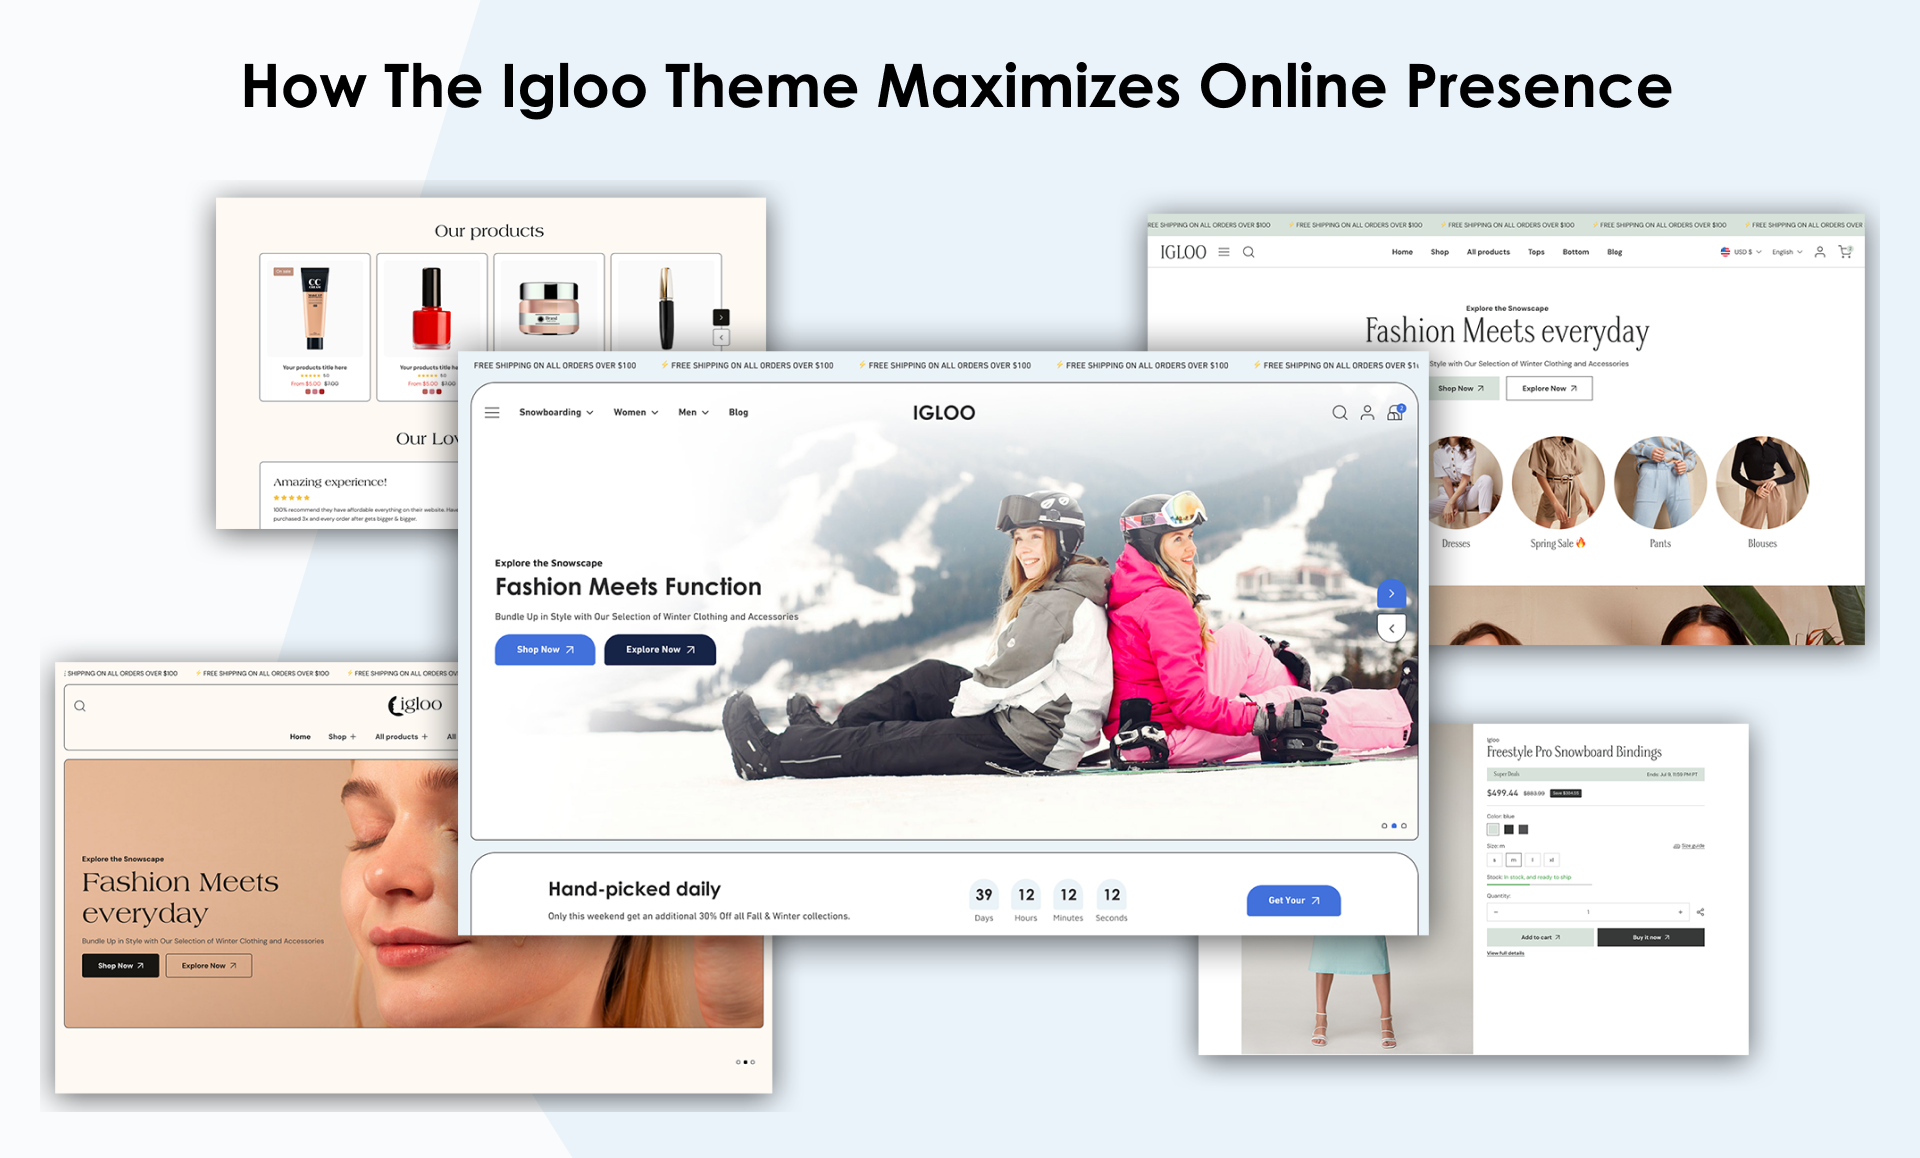 How the Igloo Theme Maximizes Online Presence